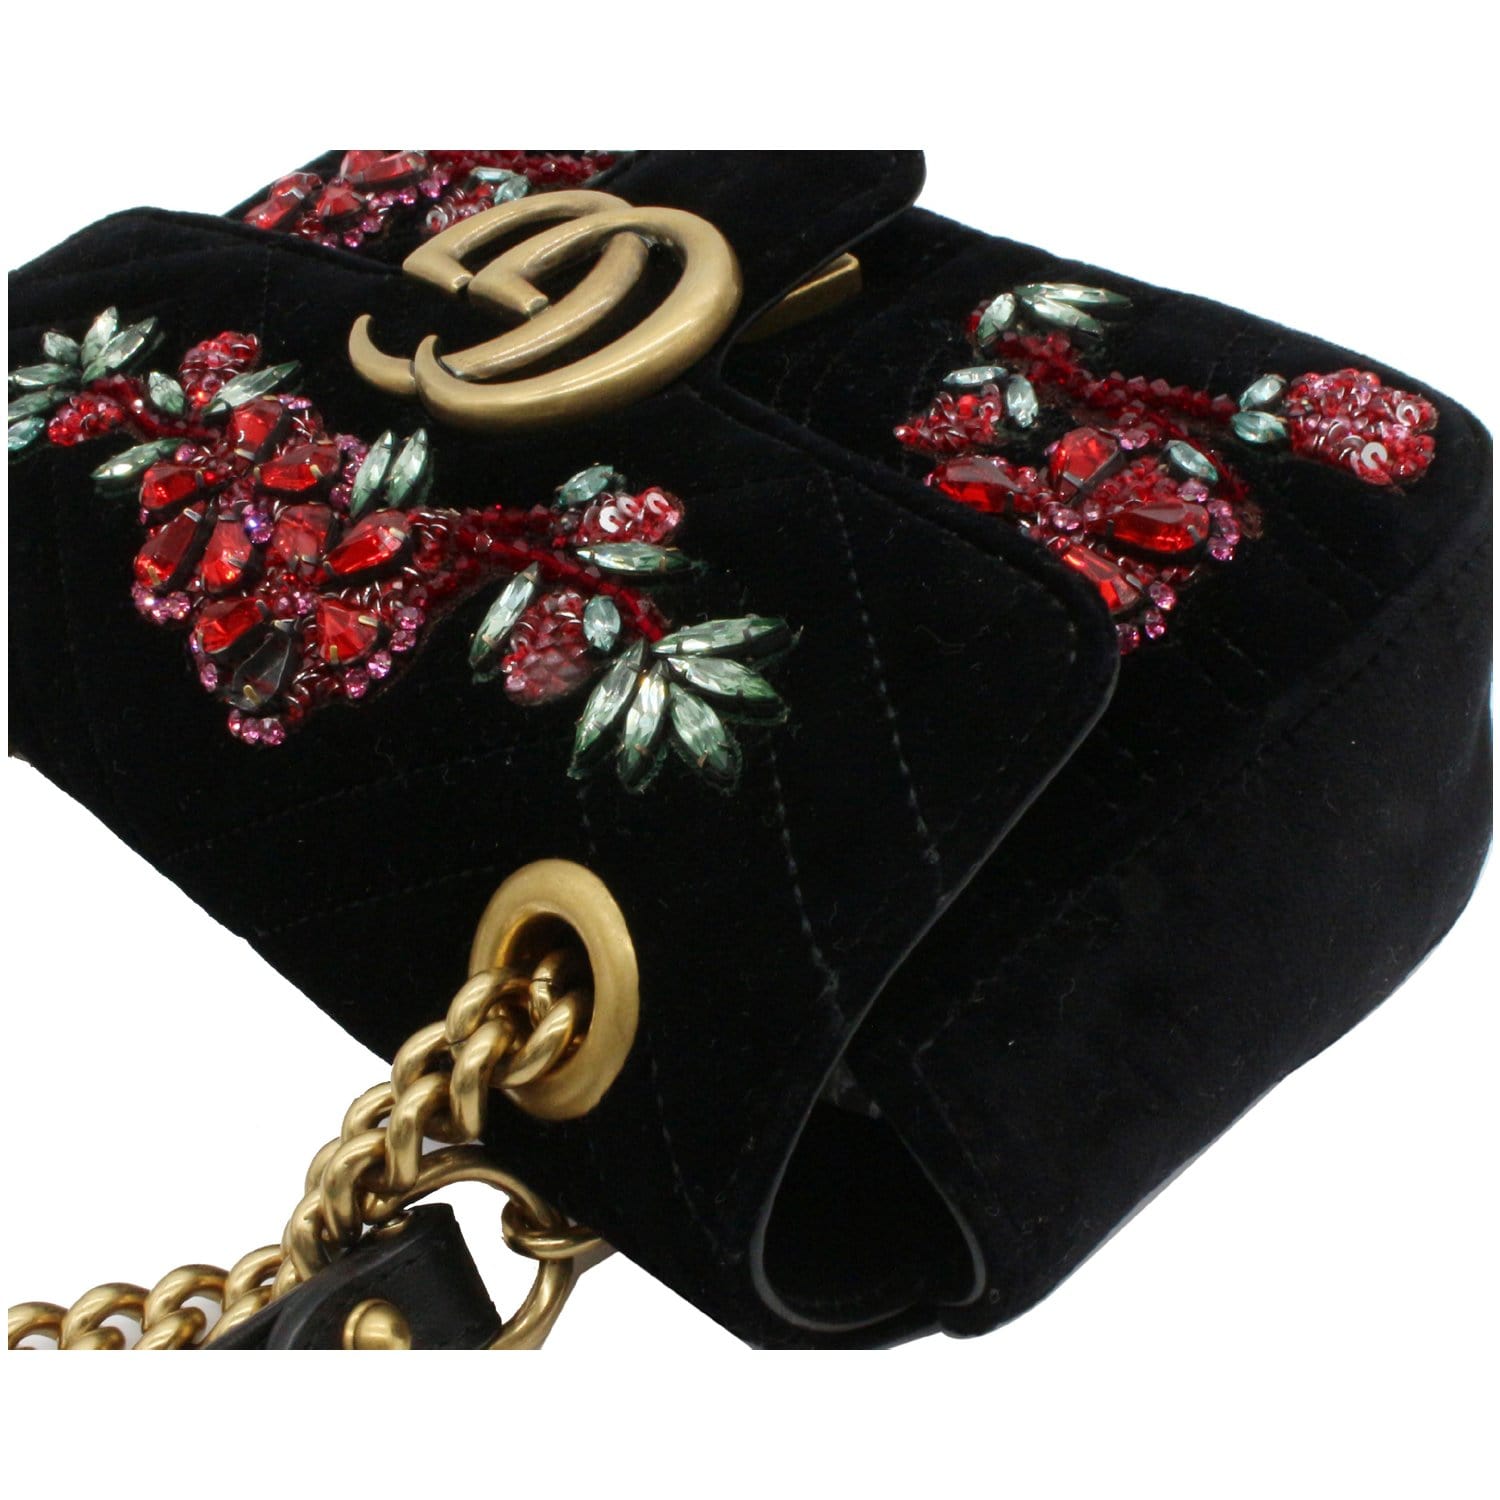 Gucci Gg Marmont Flower Crochet Bag